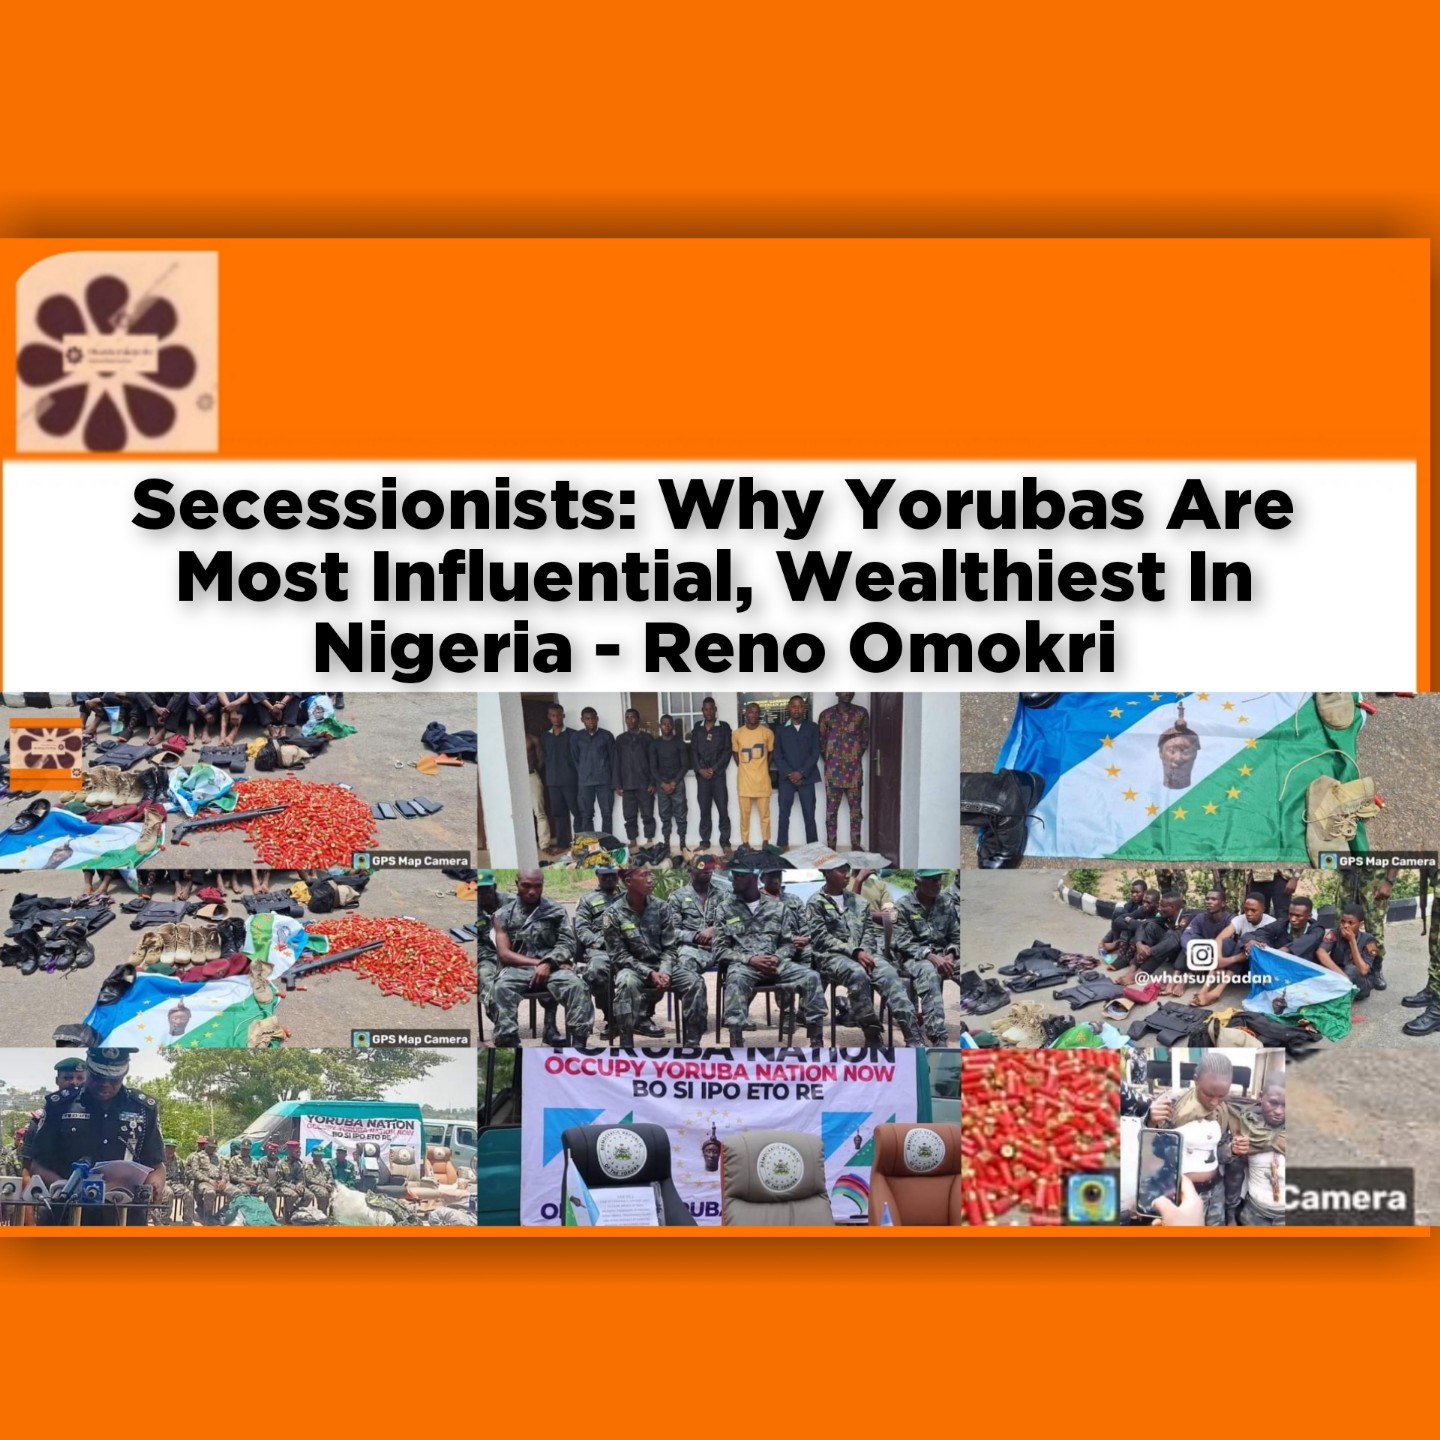 Secessionists: Why Yorubas Are Most Influential, Wealthiest In Nigeria - Reno Omokri ~ OsazuwaAkonedo #Biafra